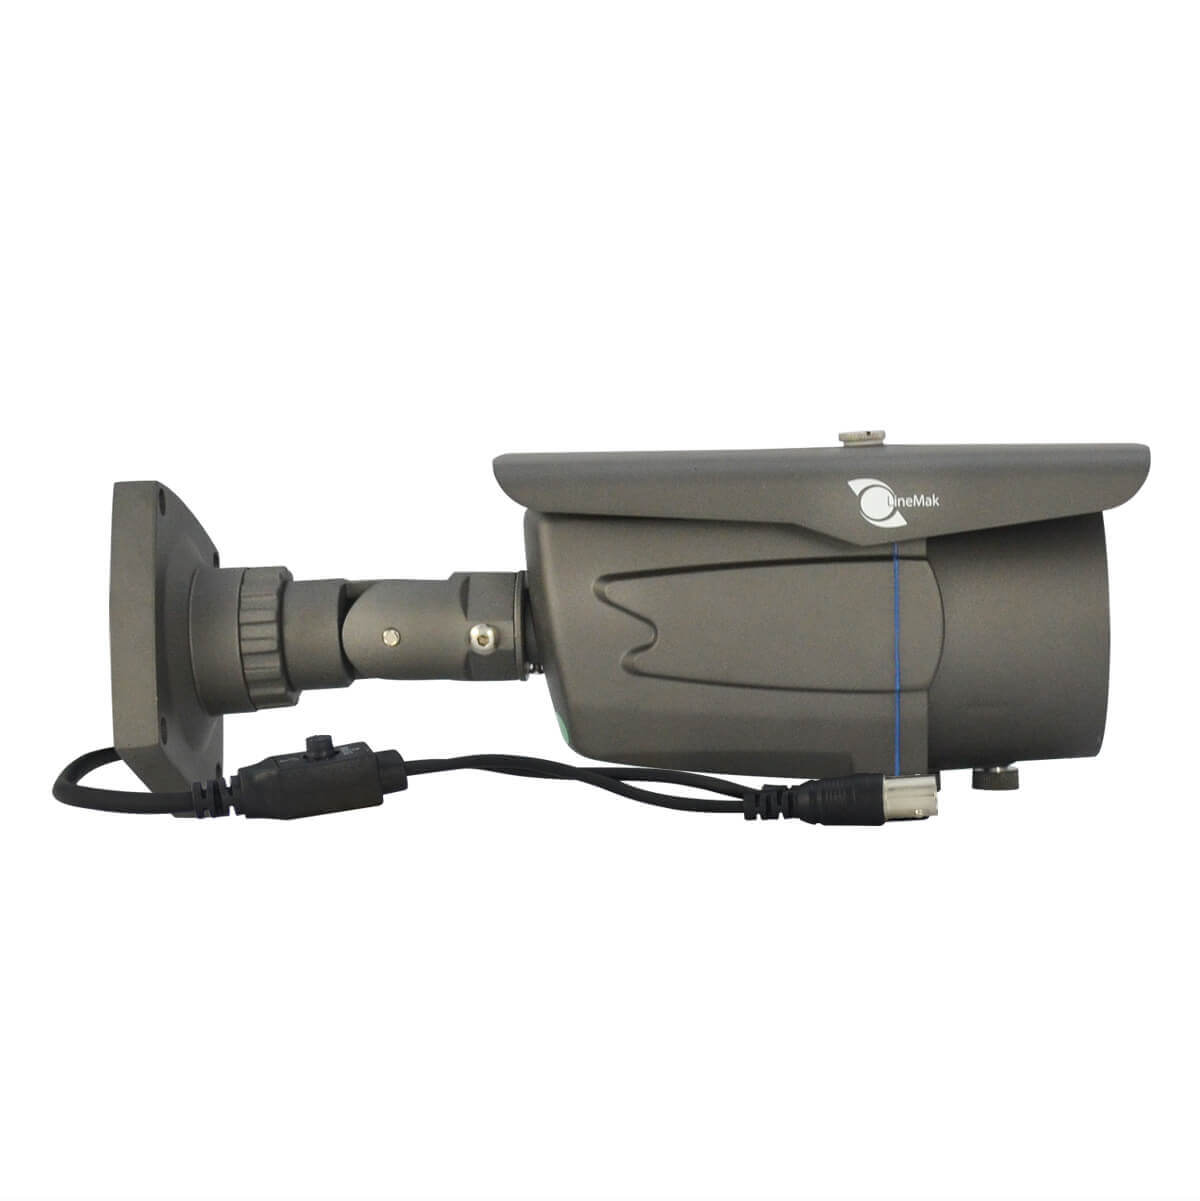 Camara bazuca, Sensor CCD Sony 1/3, 700TVL, 36 LEDs, 40m IR, IP66, OSD